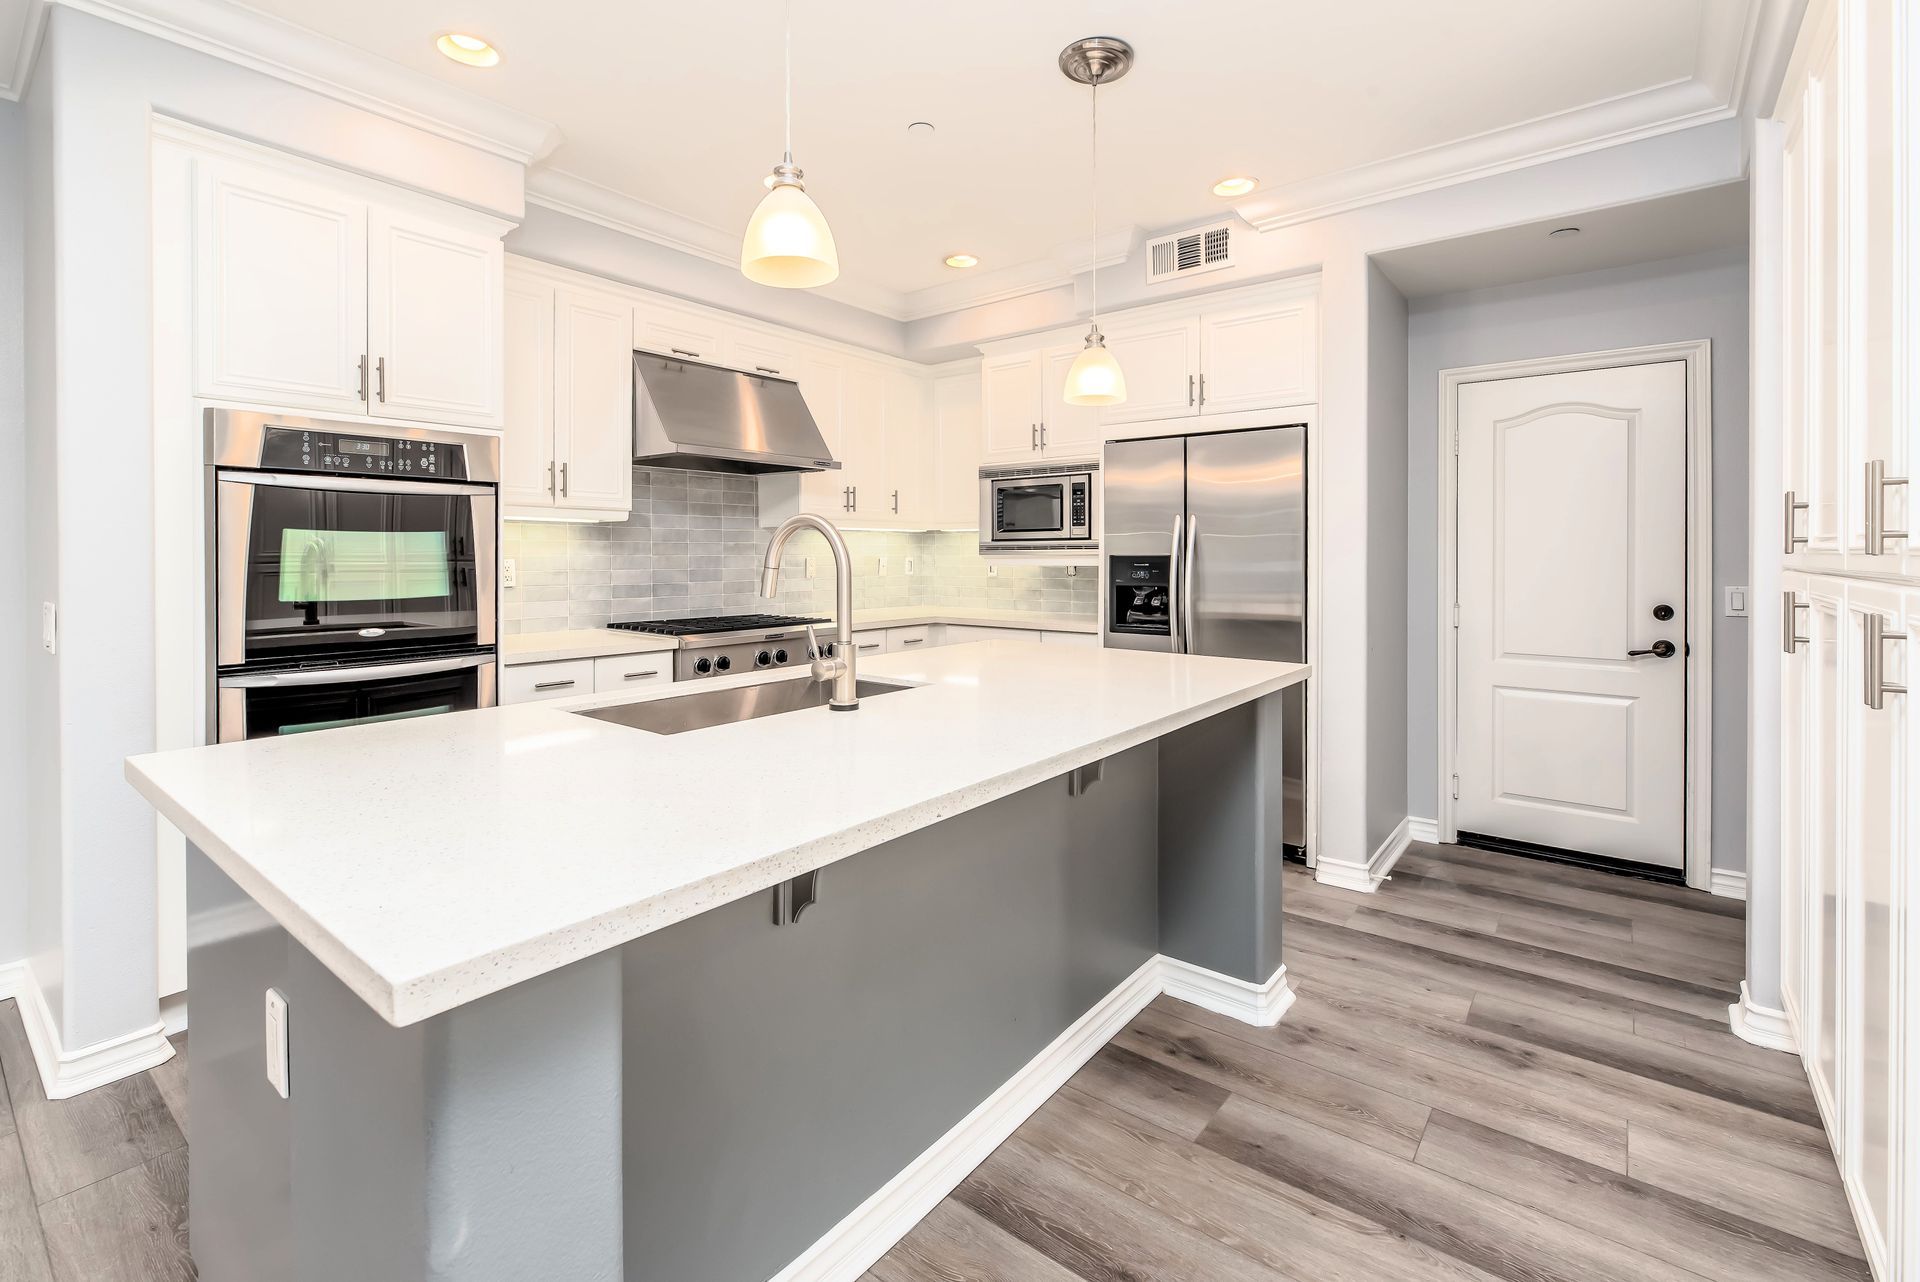 White concrete kitchen countertop with sleek and modern design.